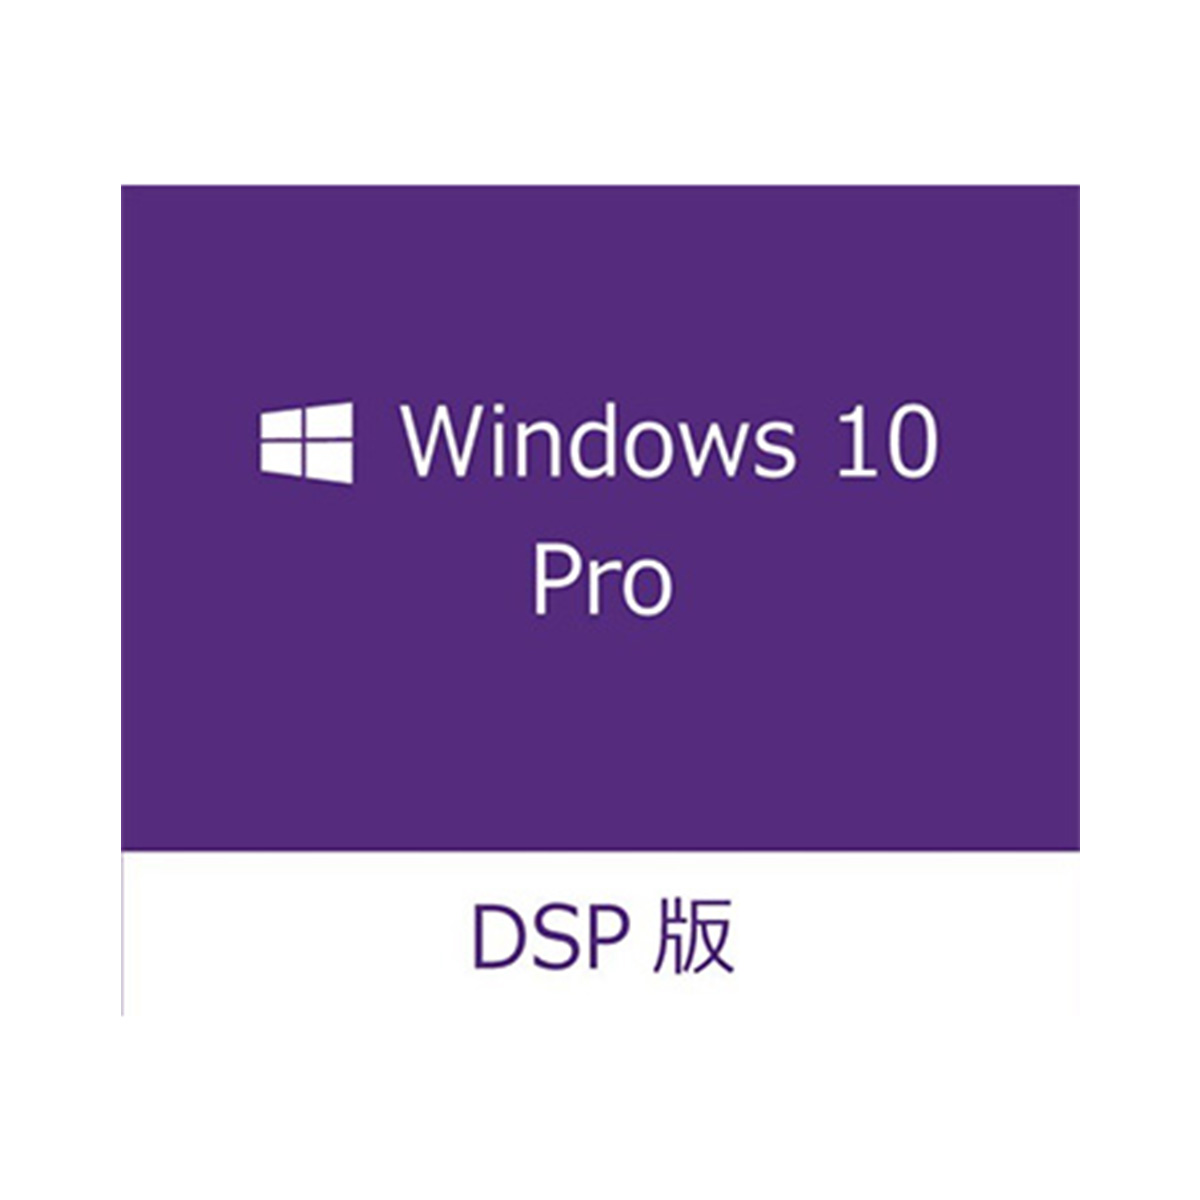 Microsoft Windows 10 Pro 64bit 日本語版 DSP FQC-08914 